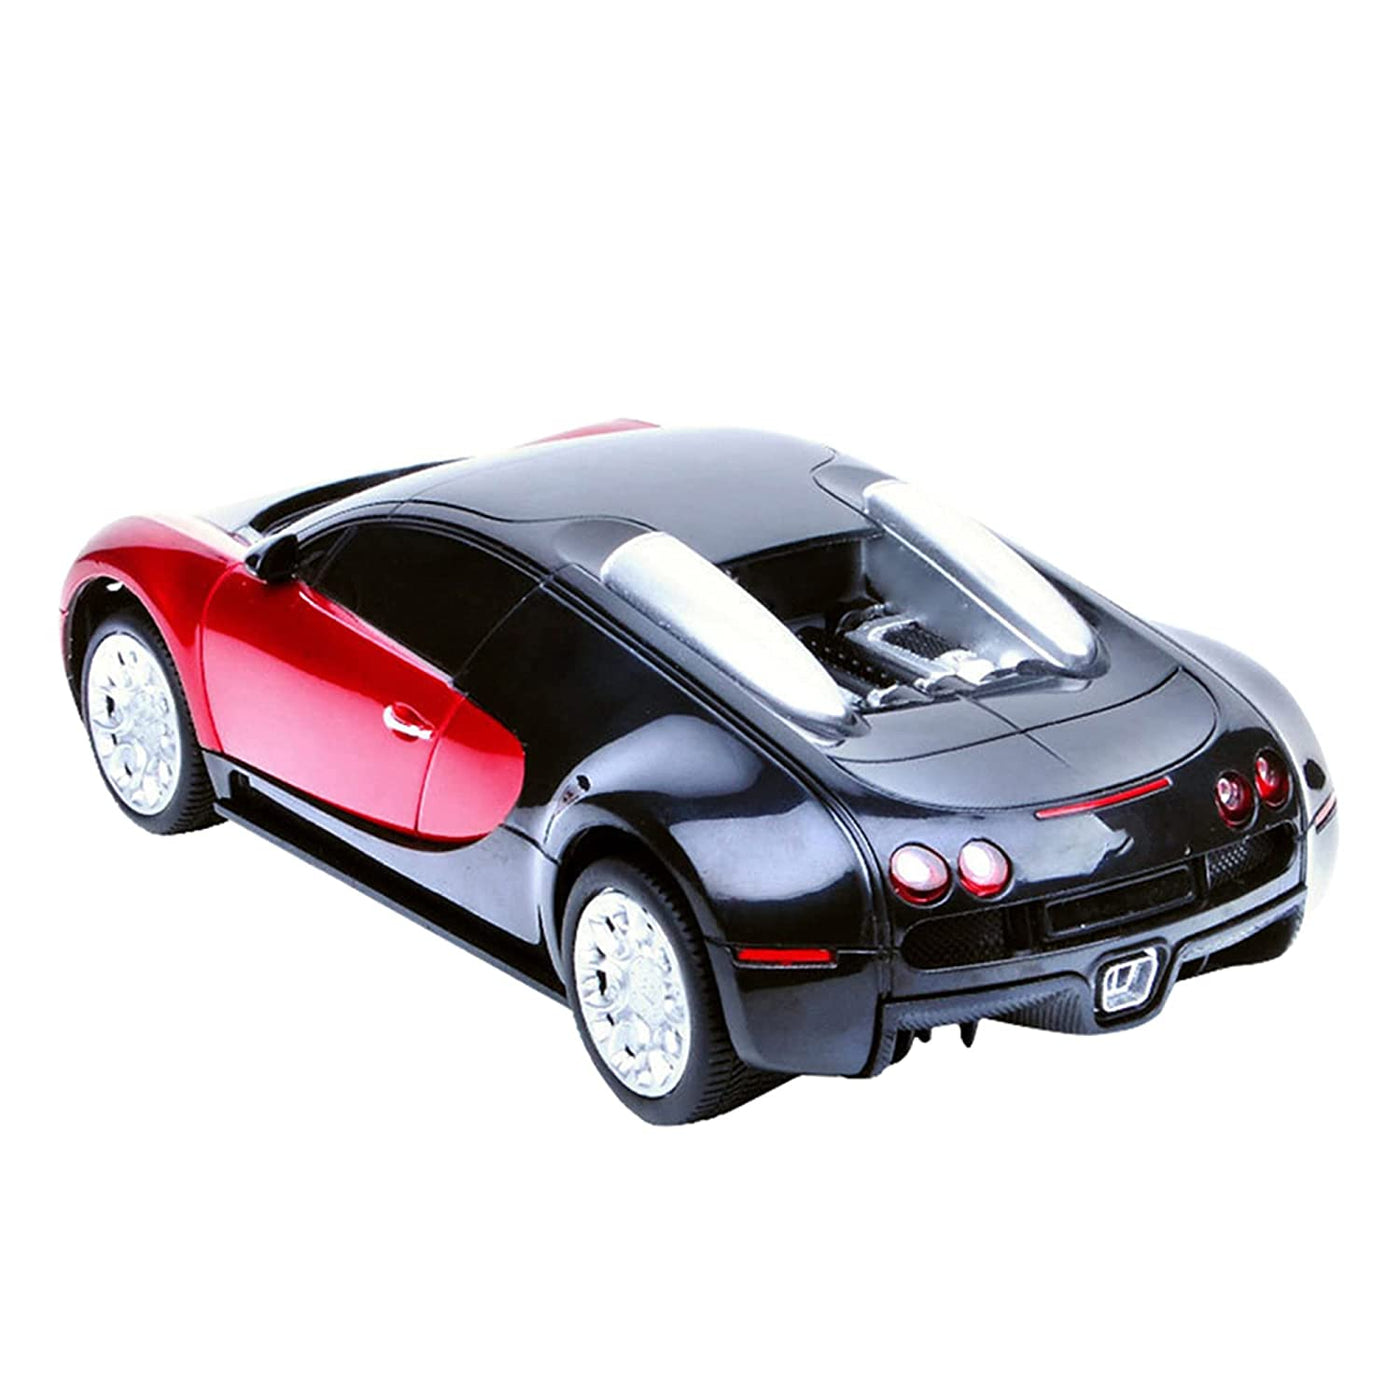 Sports Cars RC Scale 1:24 - Red | Playzu